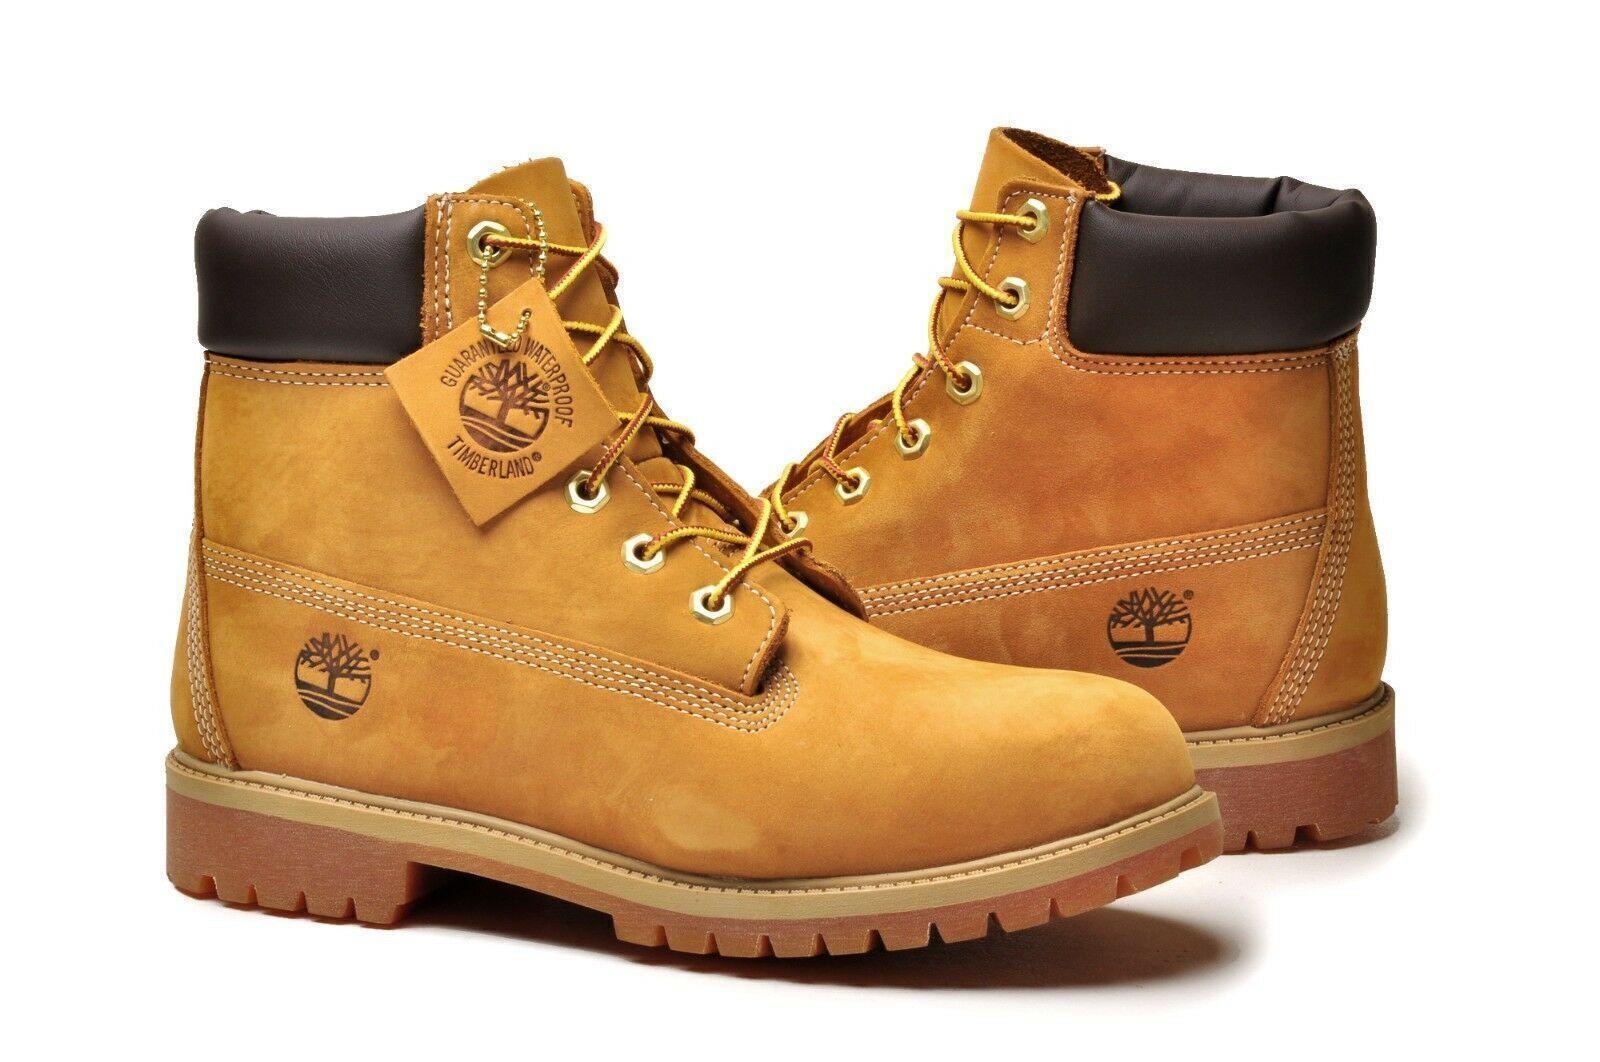 TIMBERLAND Mens 6"" Premium Waterproof Boots Original Yellow Shoes - Wheat Nubuck - Wheat Nubuck - US 10